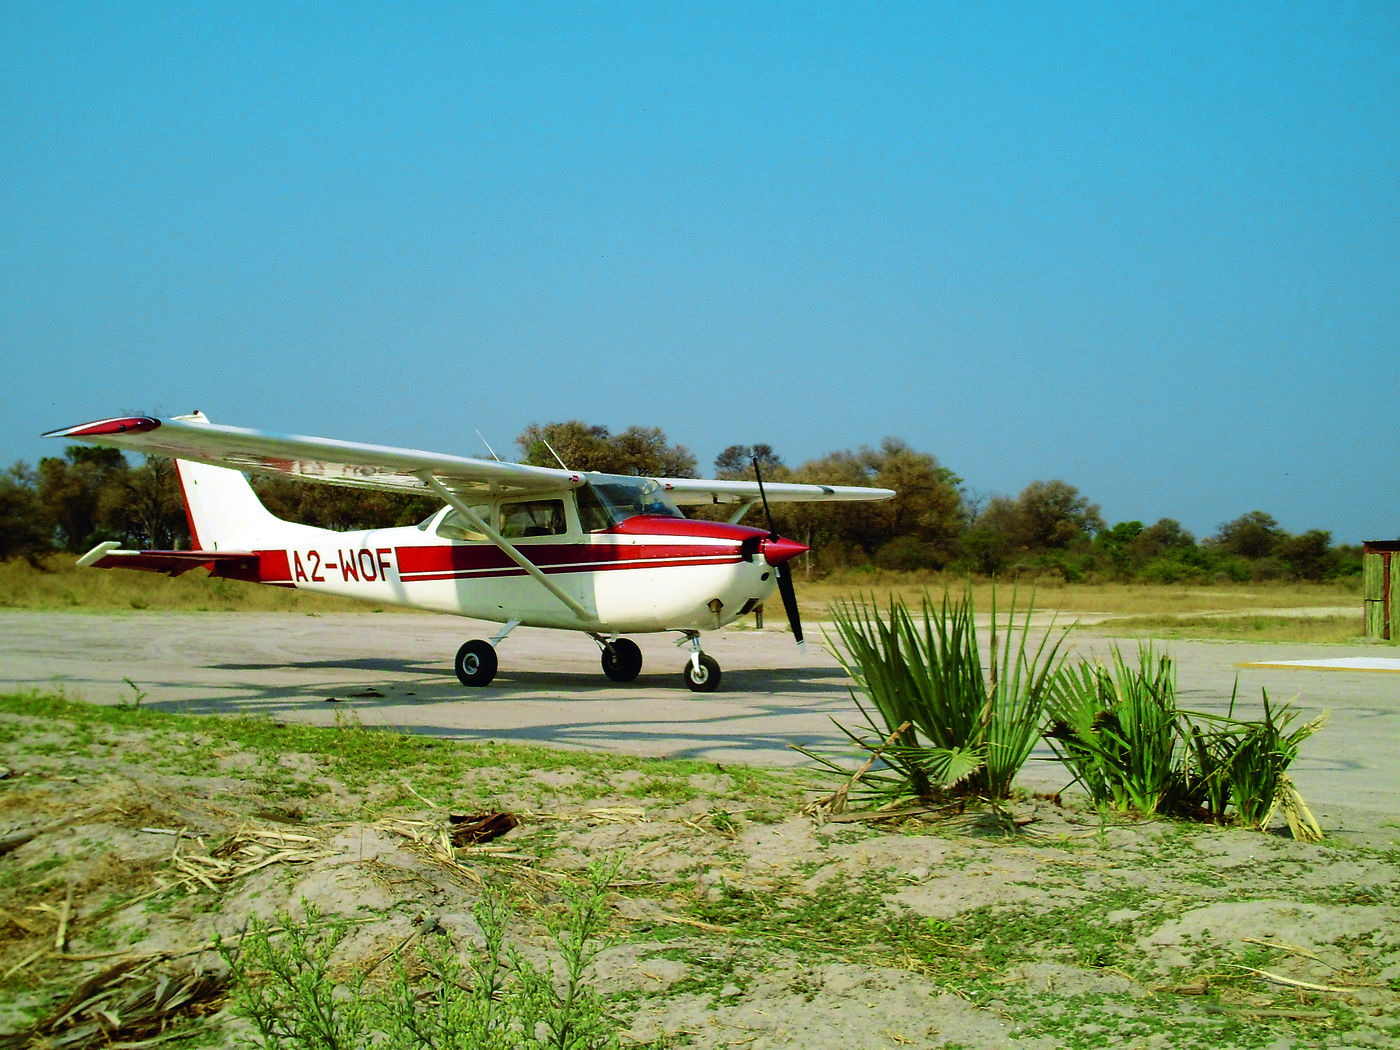 Traumziel: Viele Piloten zieht es nach Afrika, z.B. Südafrika, Namibia oder wie im Bild Botswana